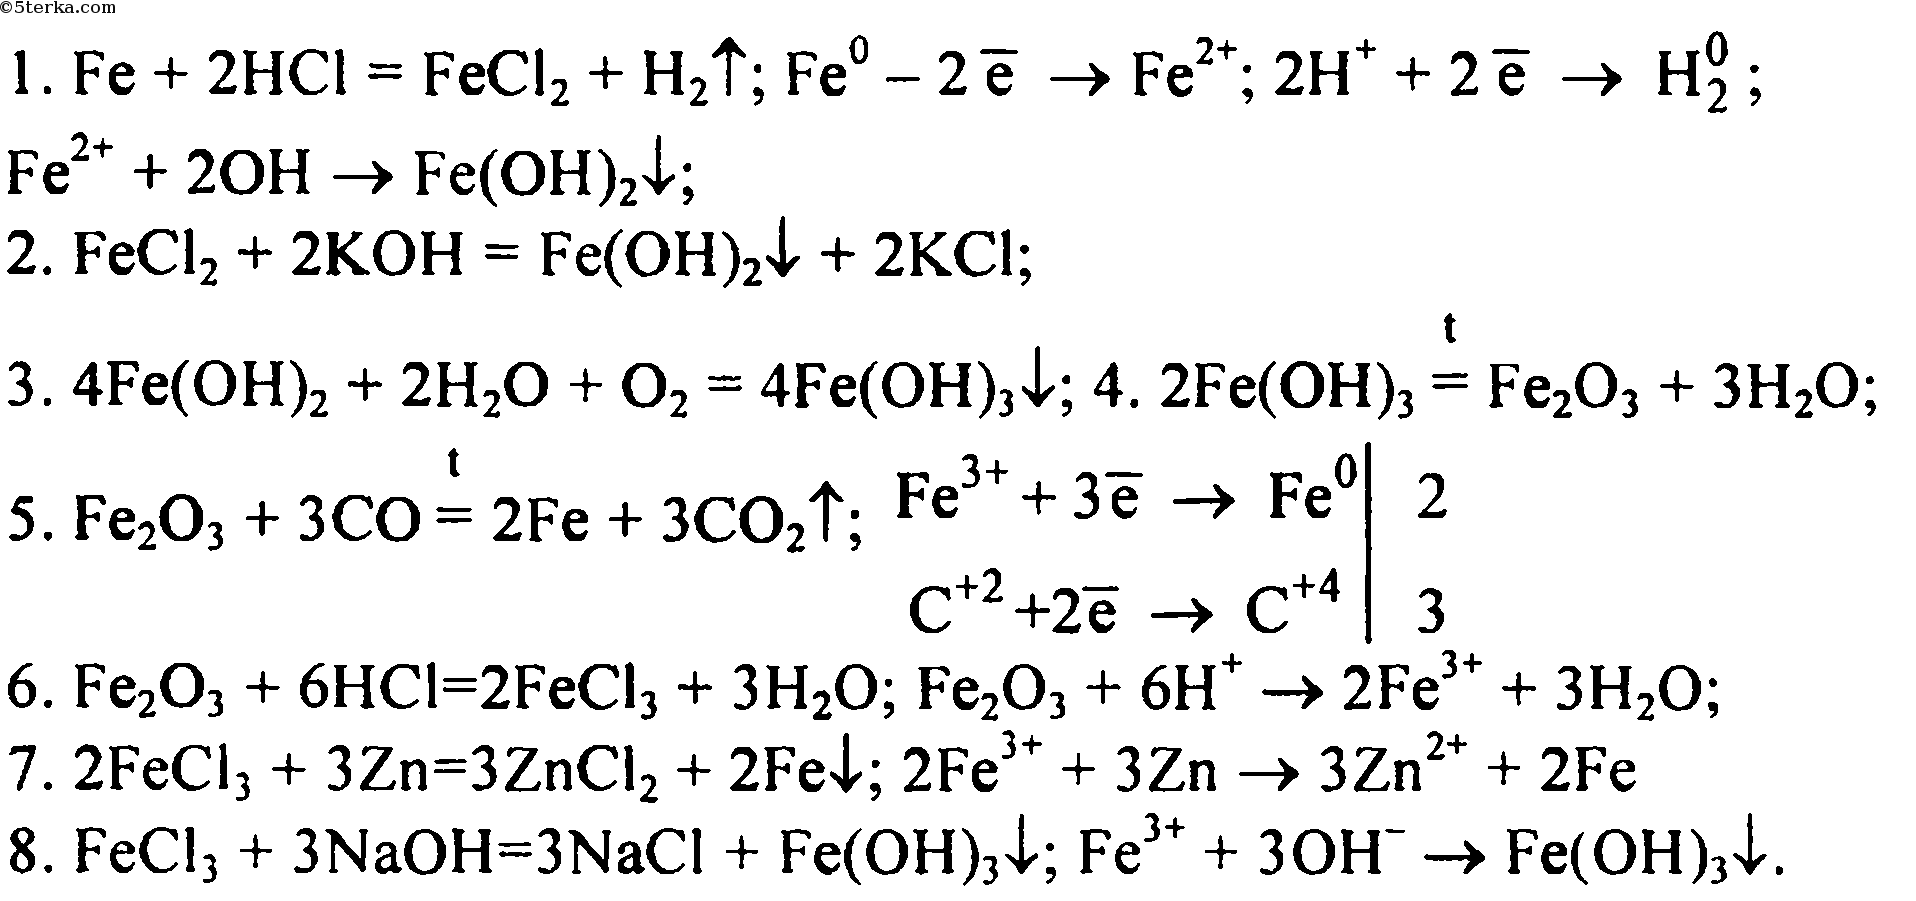 Zn fecl. Fe2o3 уравнение реакции. Схема превращений. Уравнения реакций. Уравнение химических реакций к цепочкам превращений. Железо цепочка превращений 9 класс.